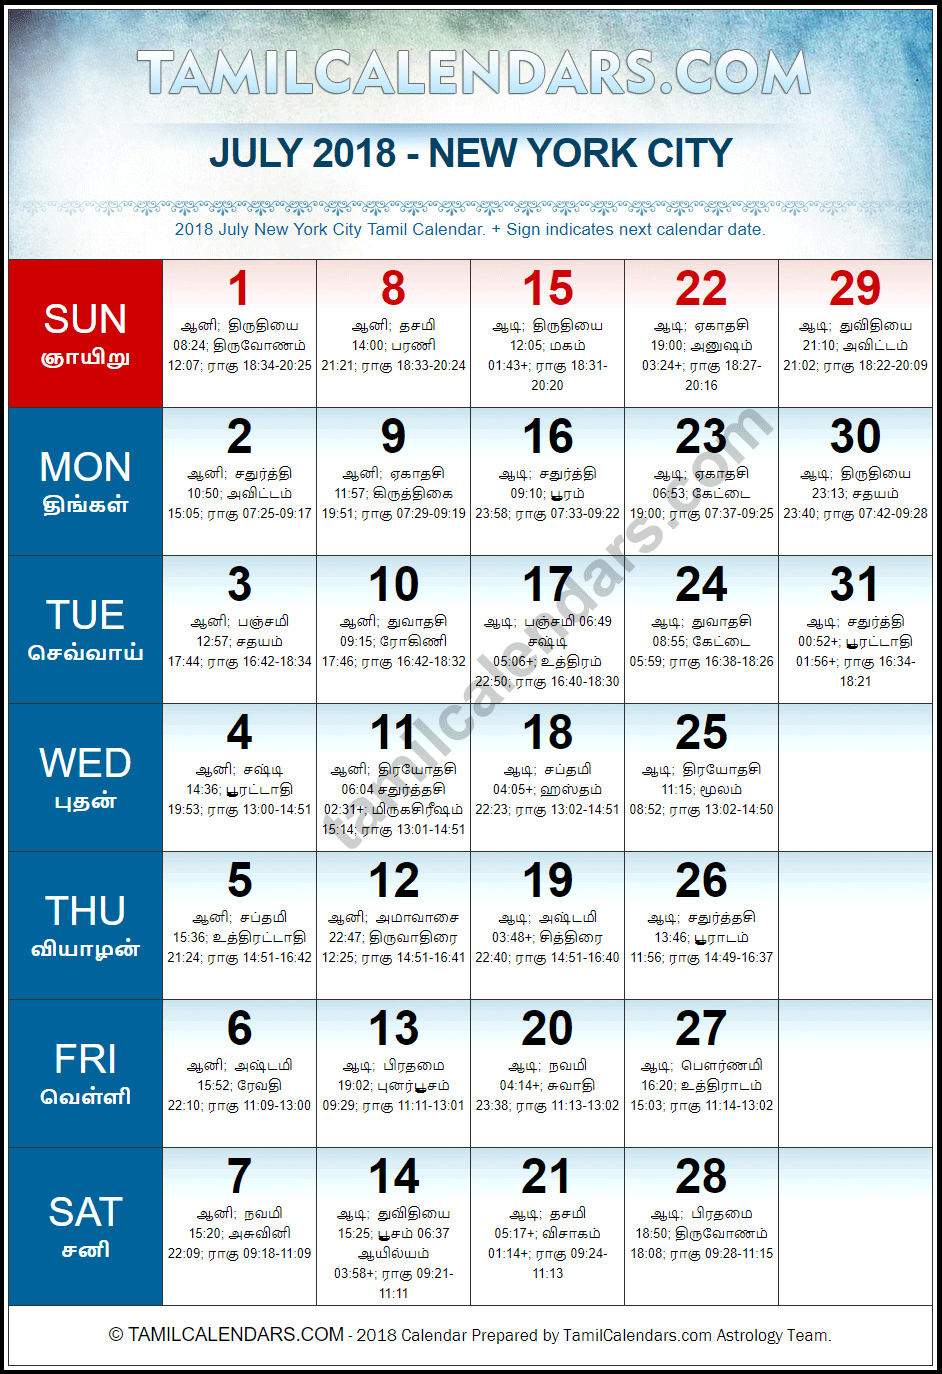 July 2018 Tamil Calendar for New York, USA